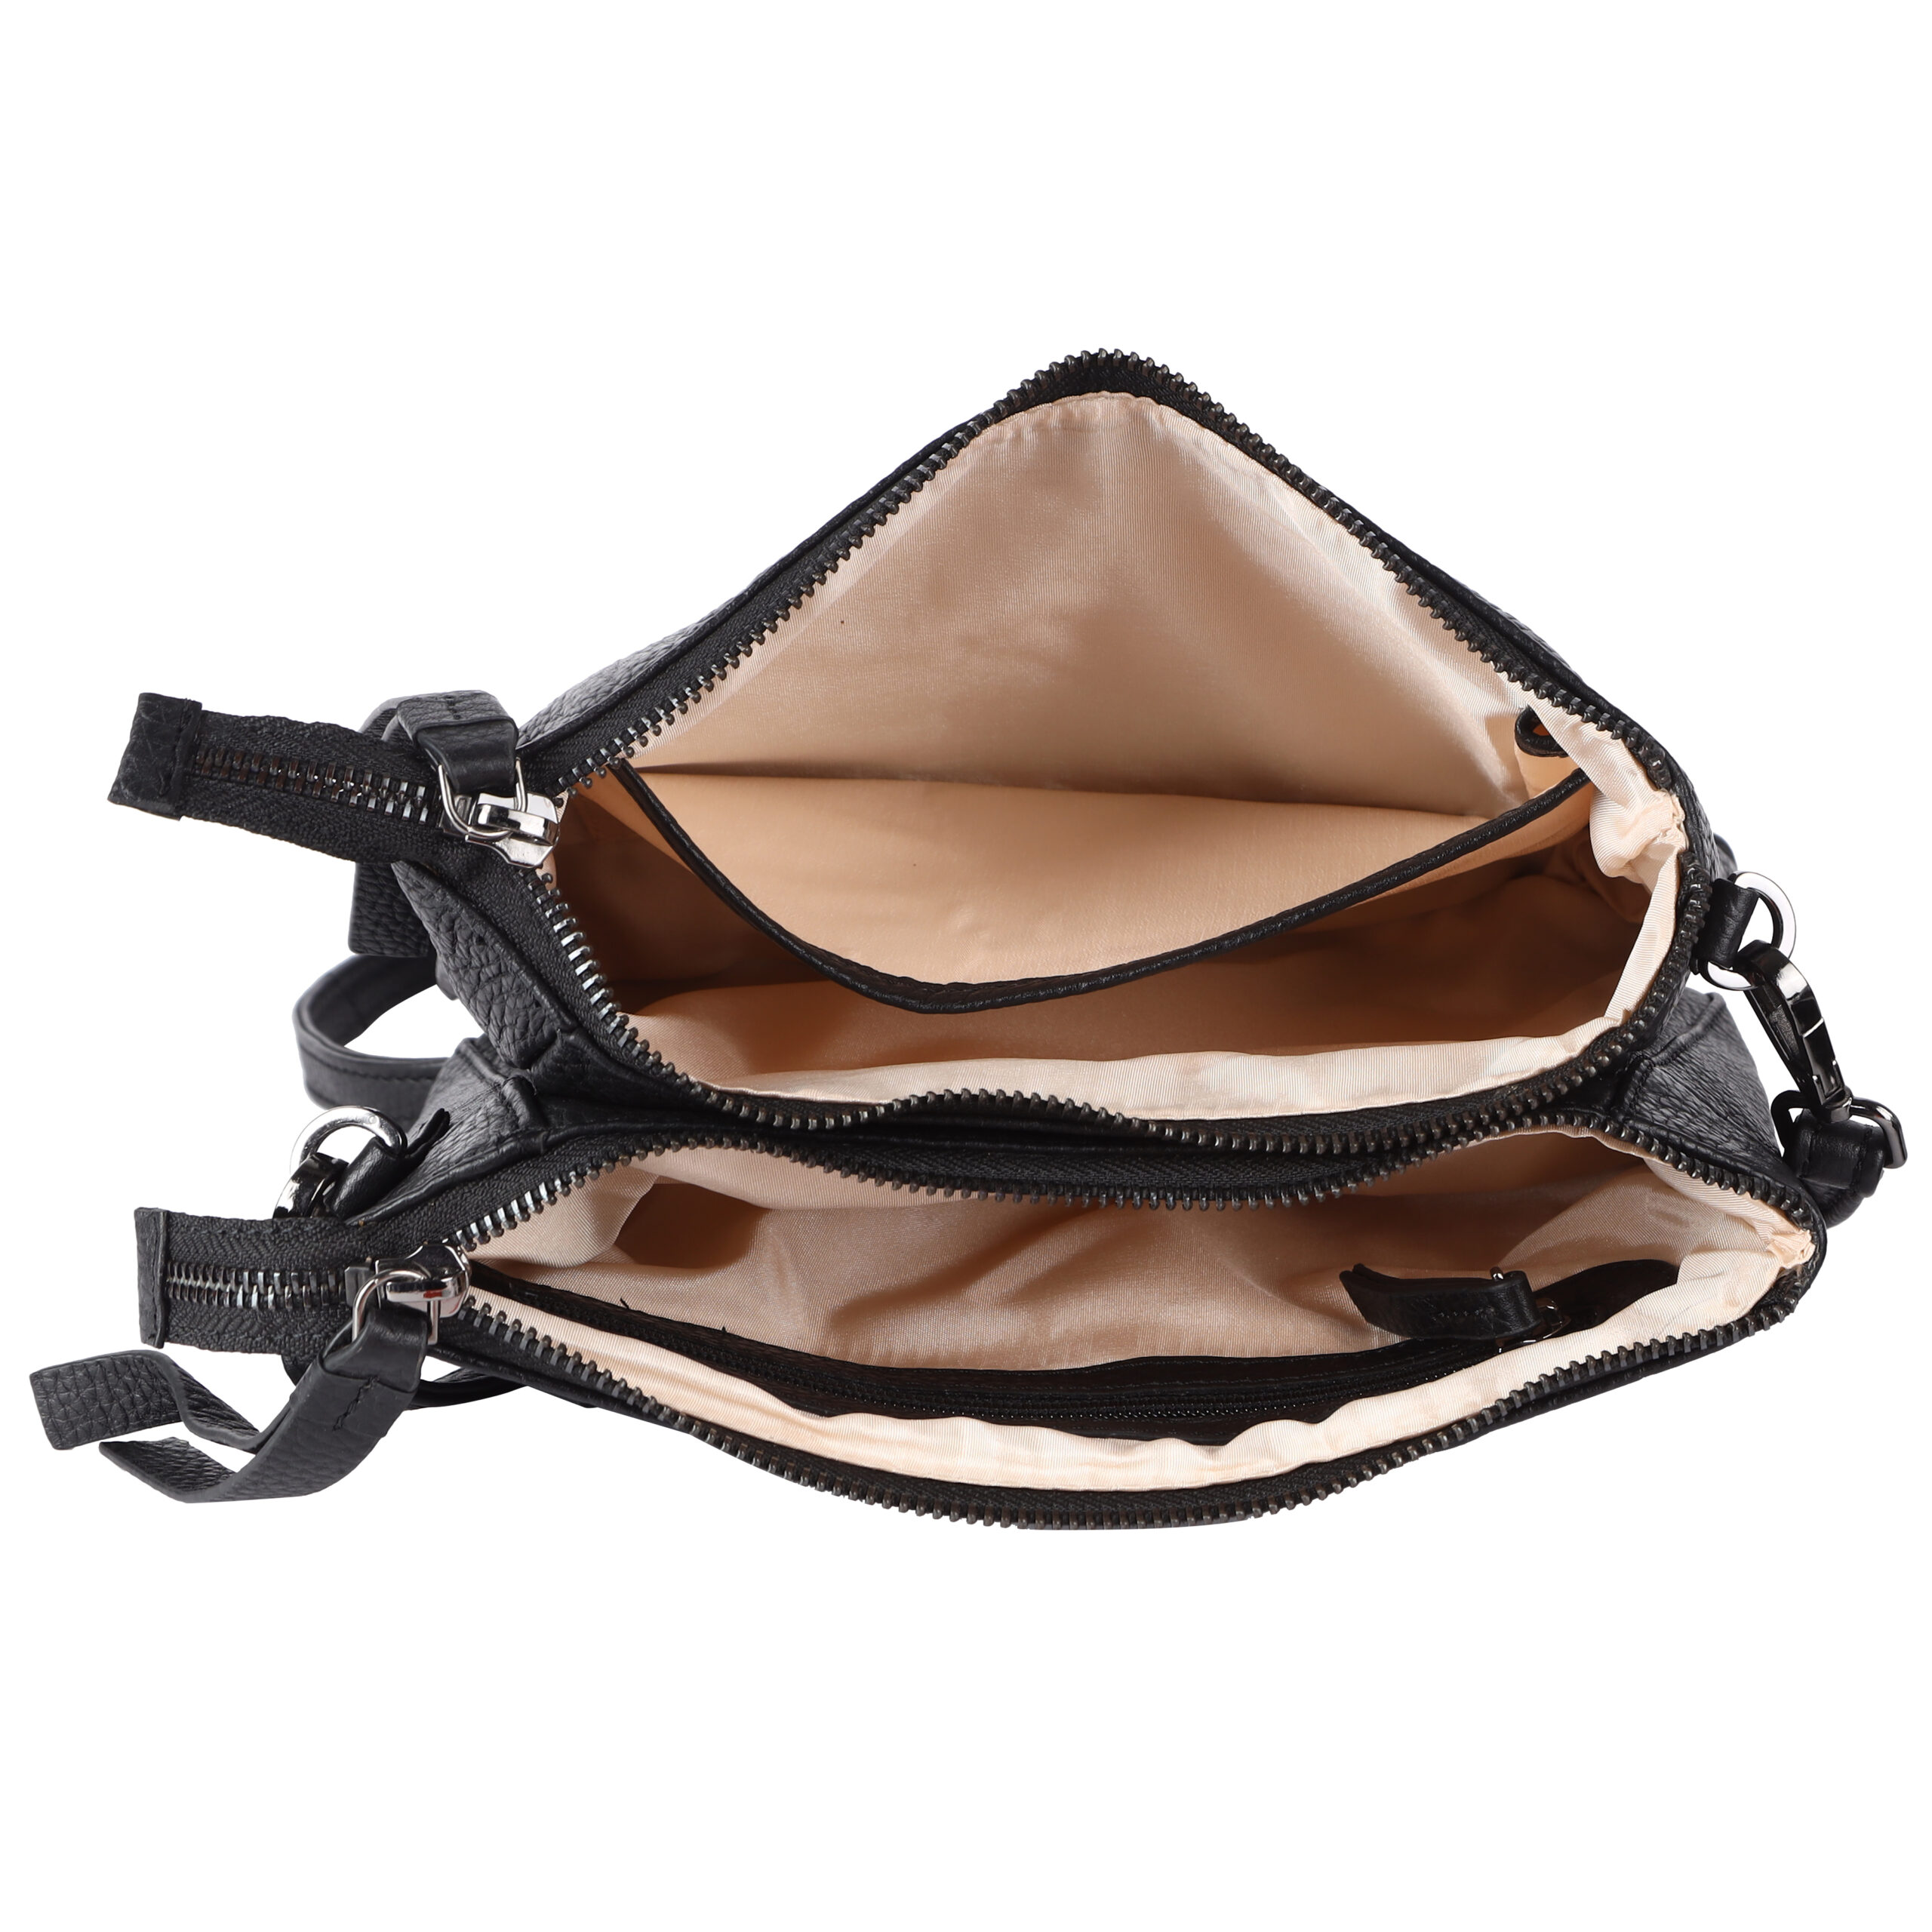 Buy Women Girls Fluffy Shoulder Bag Y2K Tote Handbag Crossbody Clutch Purse  Satchel Travel Bag, Black, One Size at Amazon.in